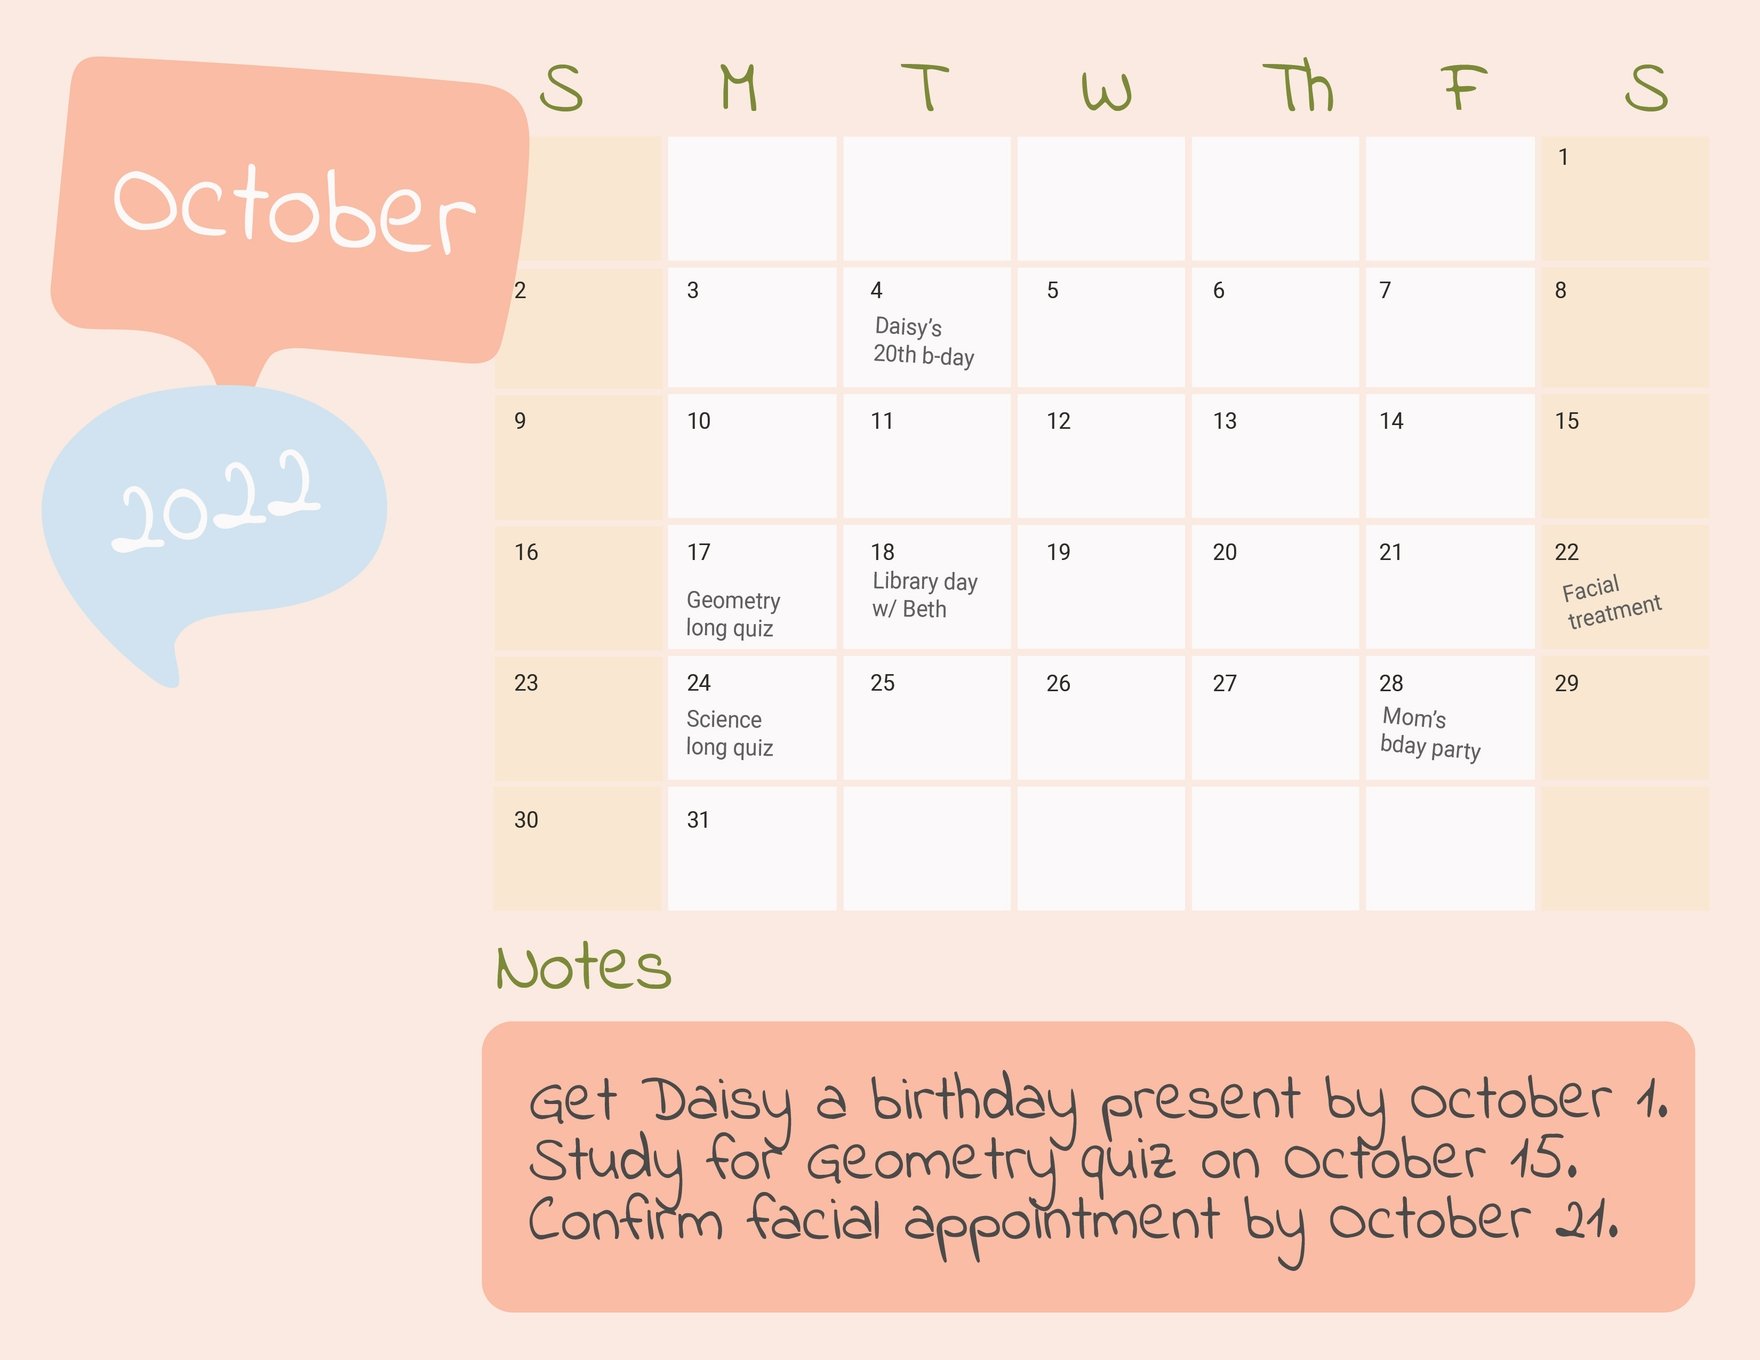 Blank October 2022 Calendar Template